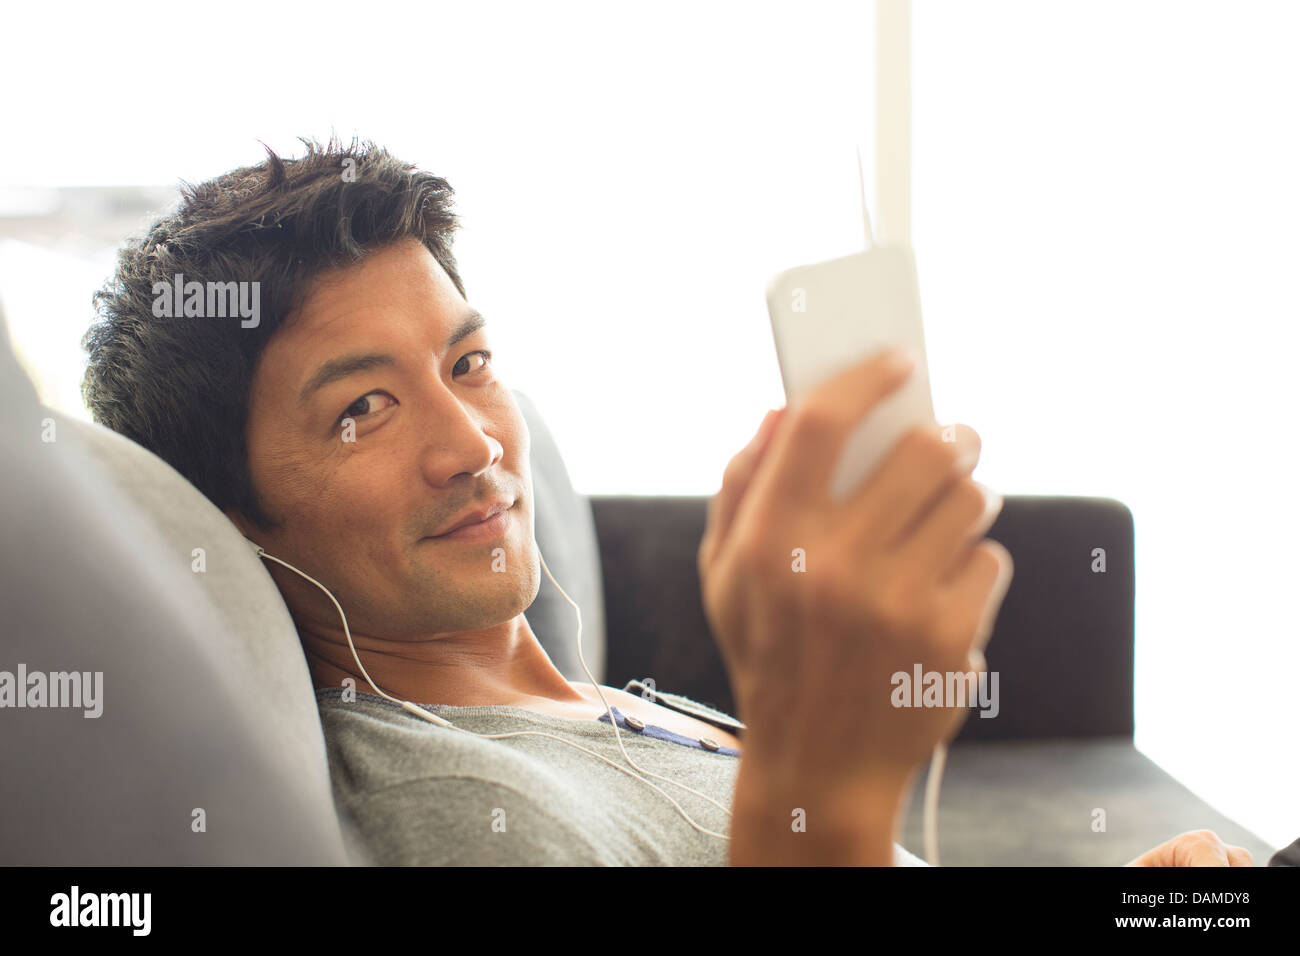 Man listening to headphones on sofa Stock Photo